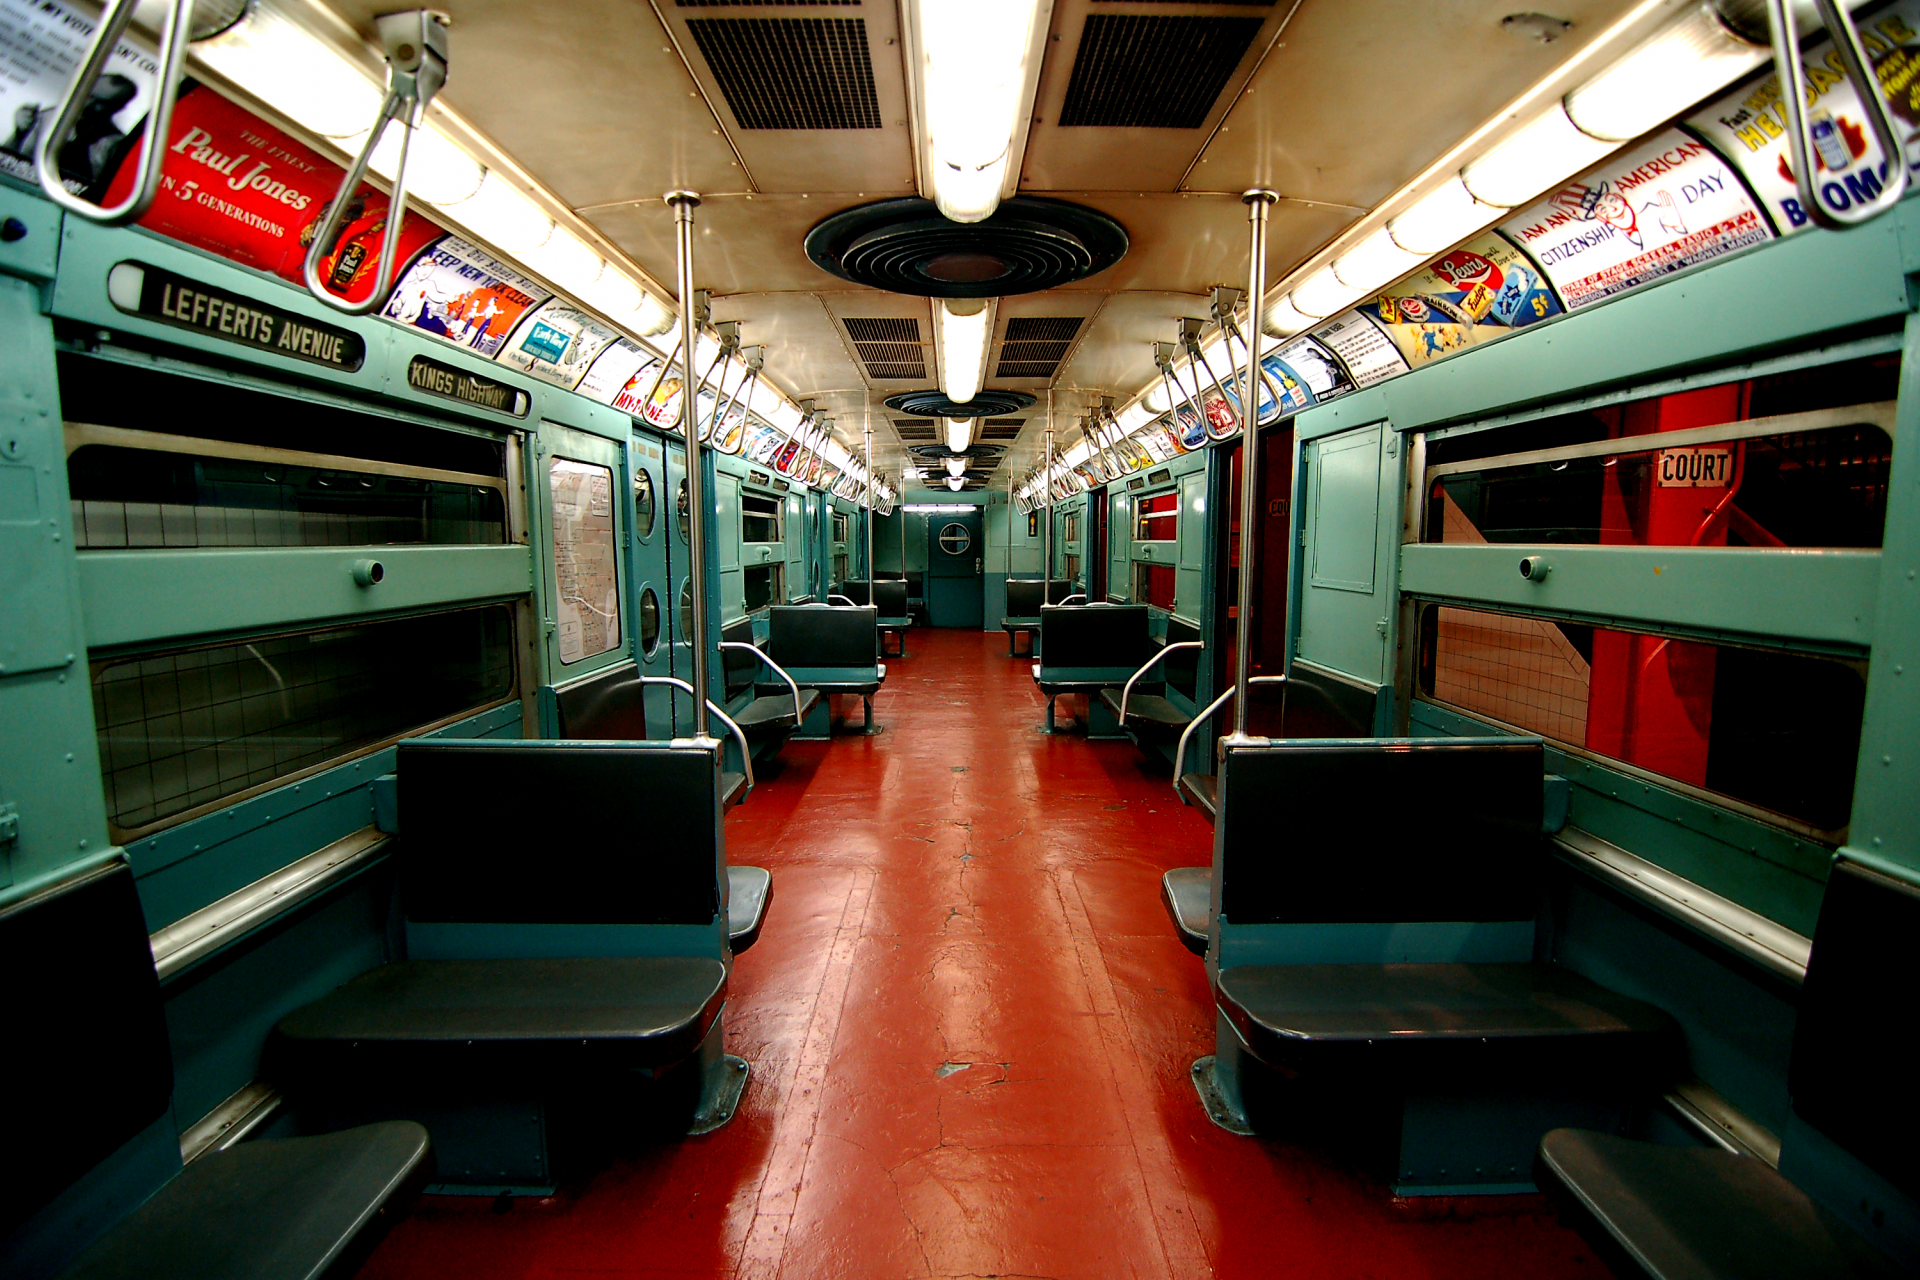 The inside of the R11 prototype subway car has red floors, grey plastic seats, and aqua green walls.